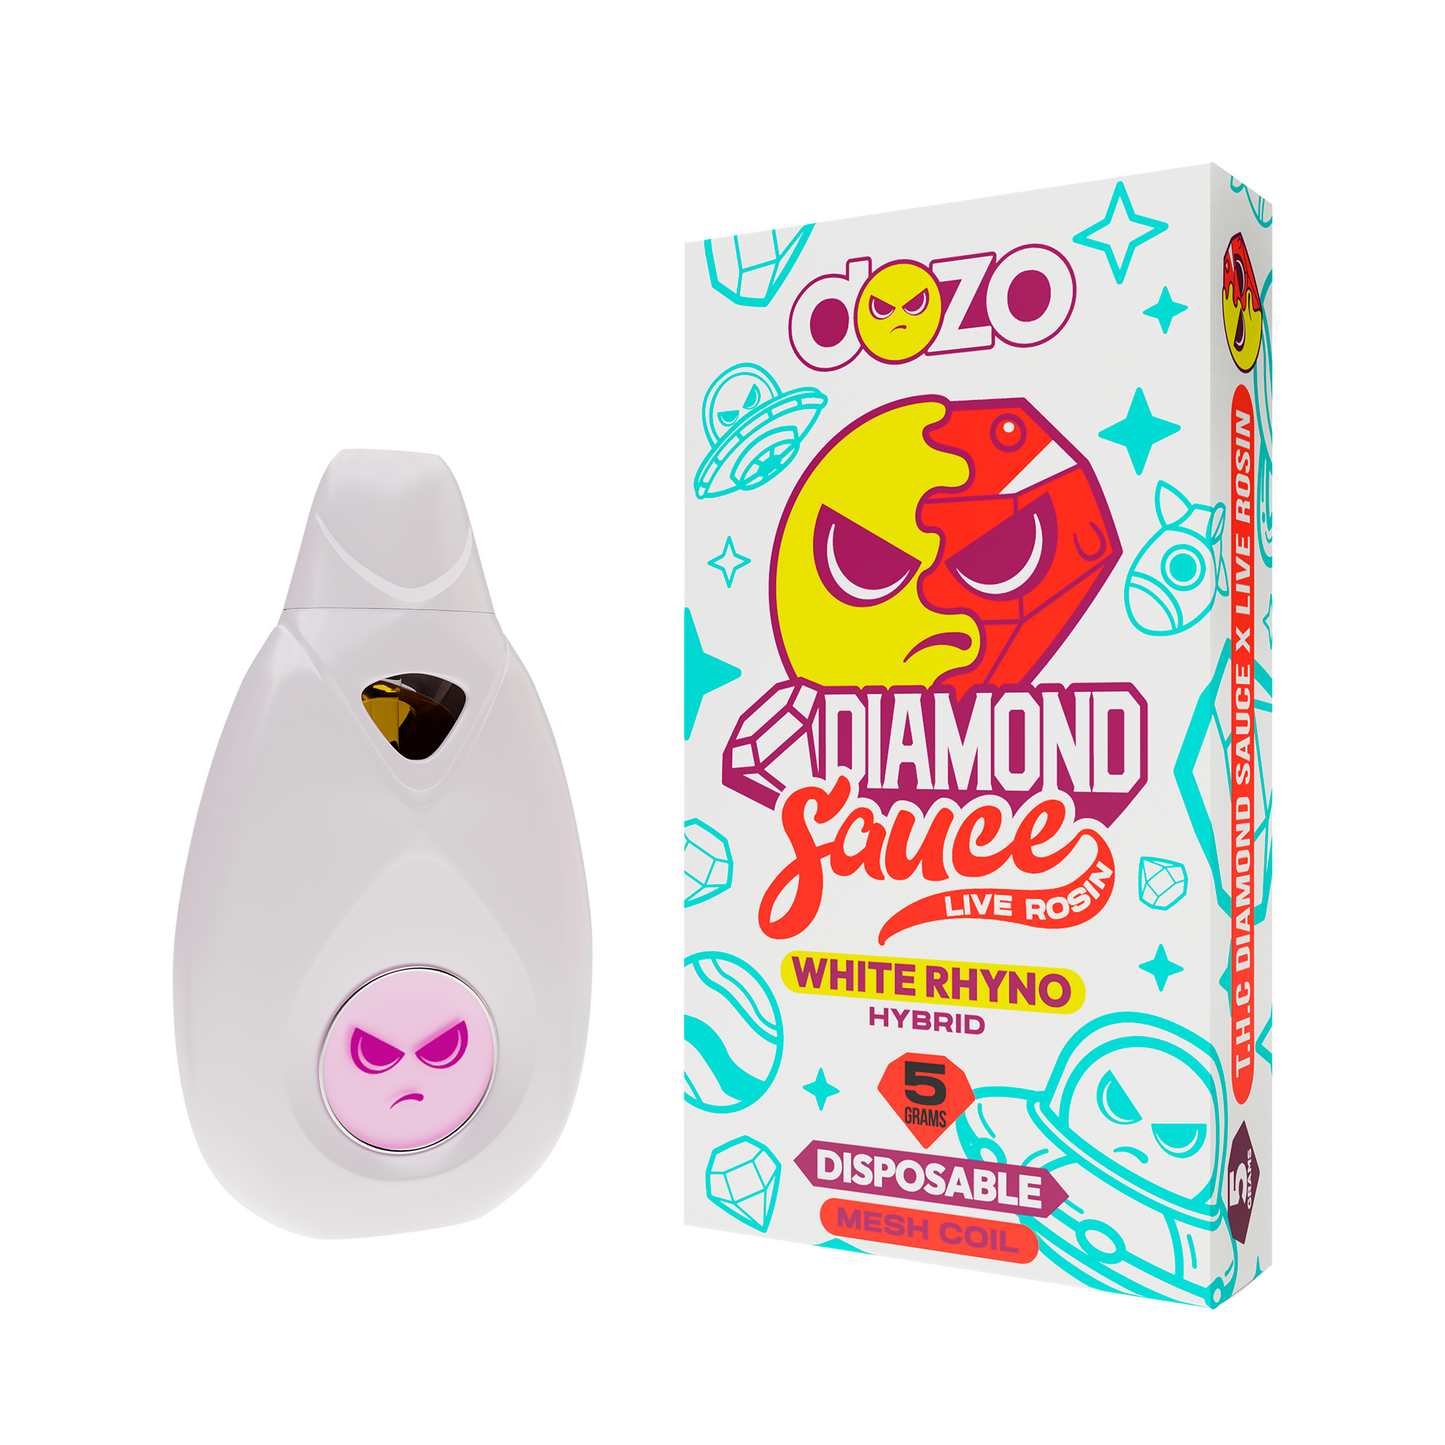 Diamond Sauce Disposable 5g | White Rhyno